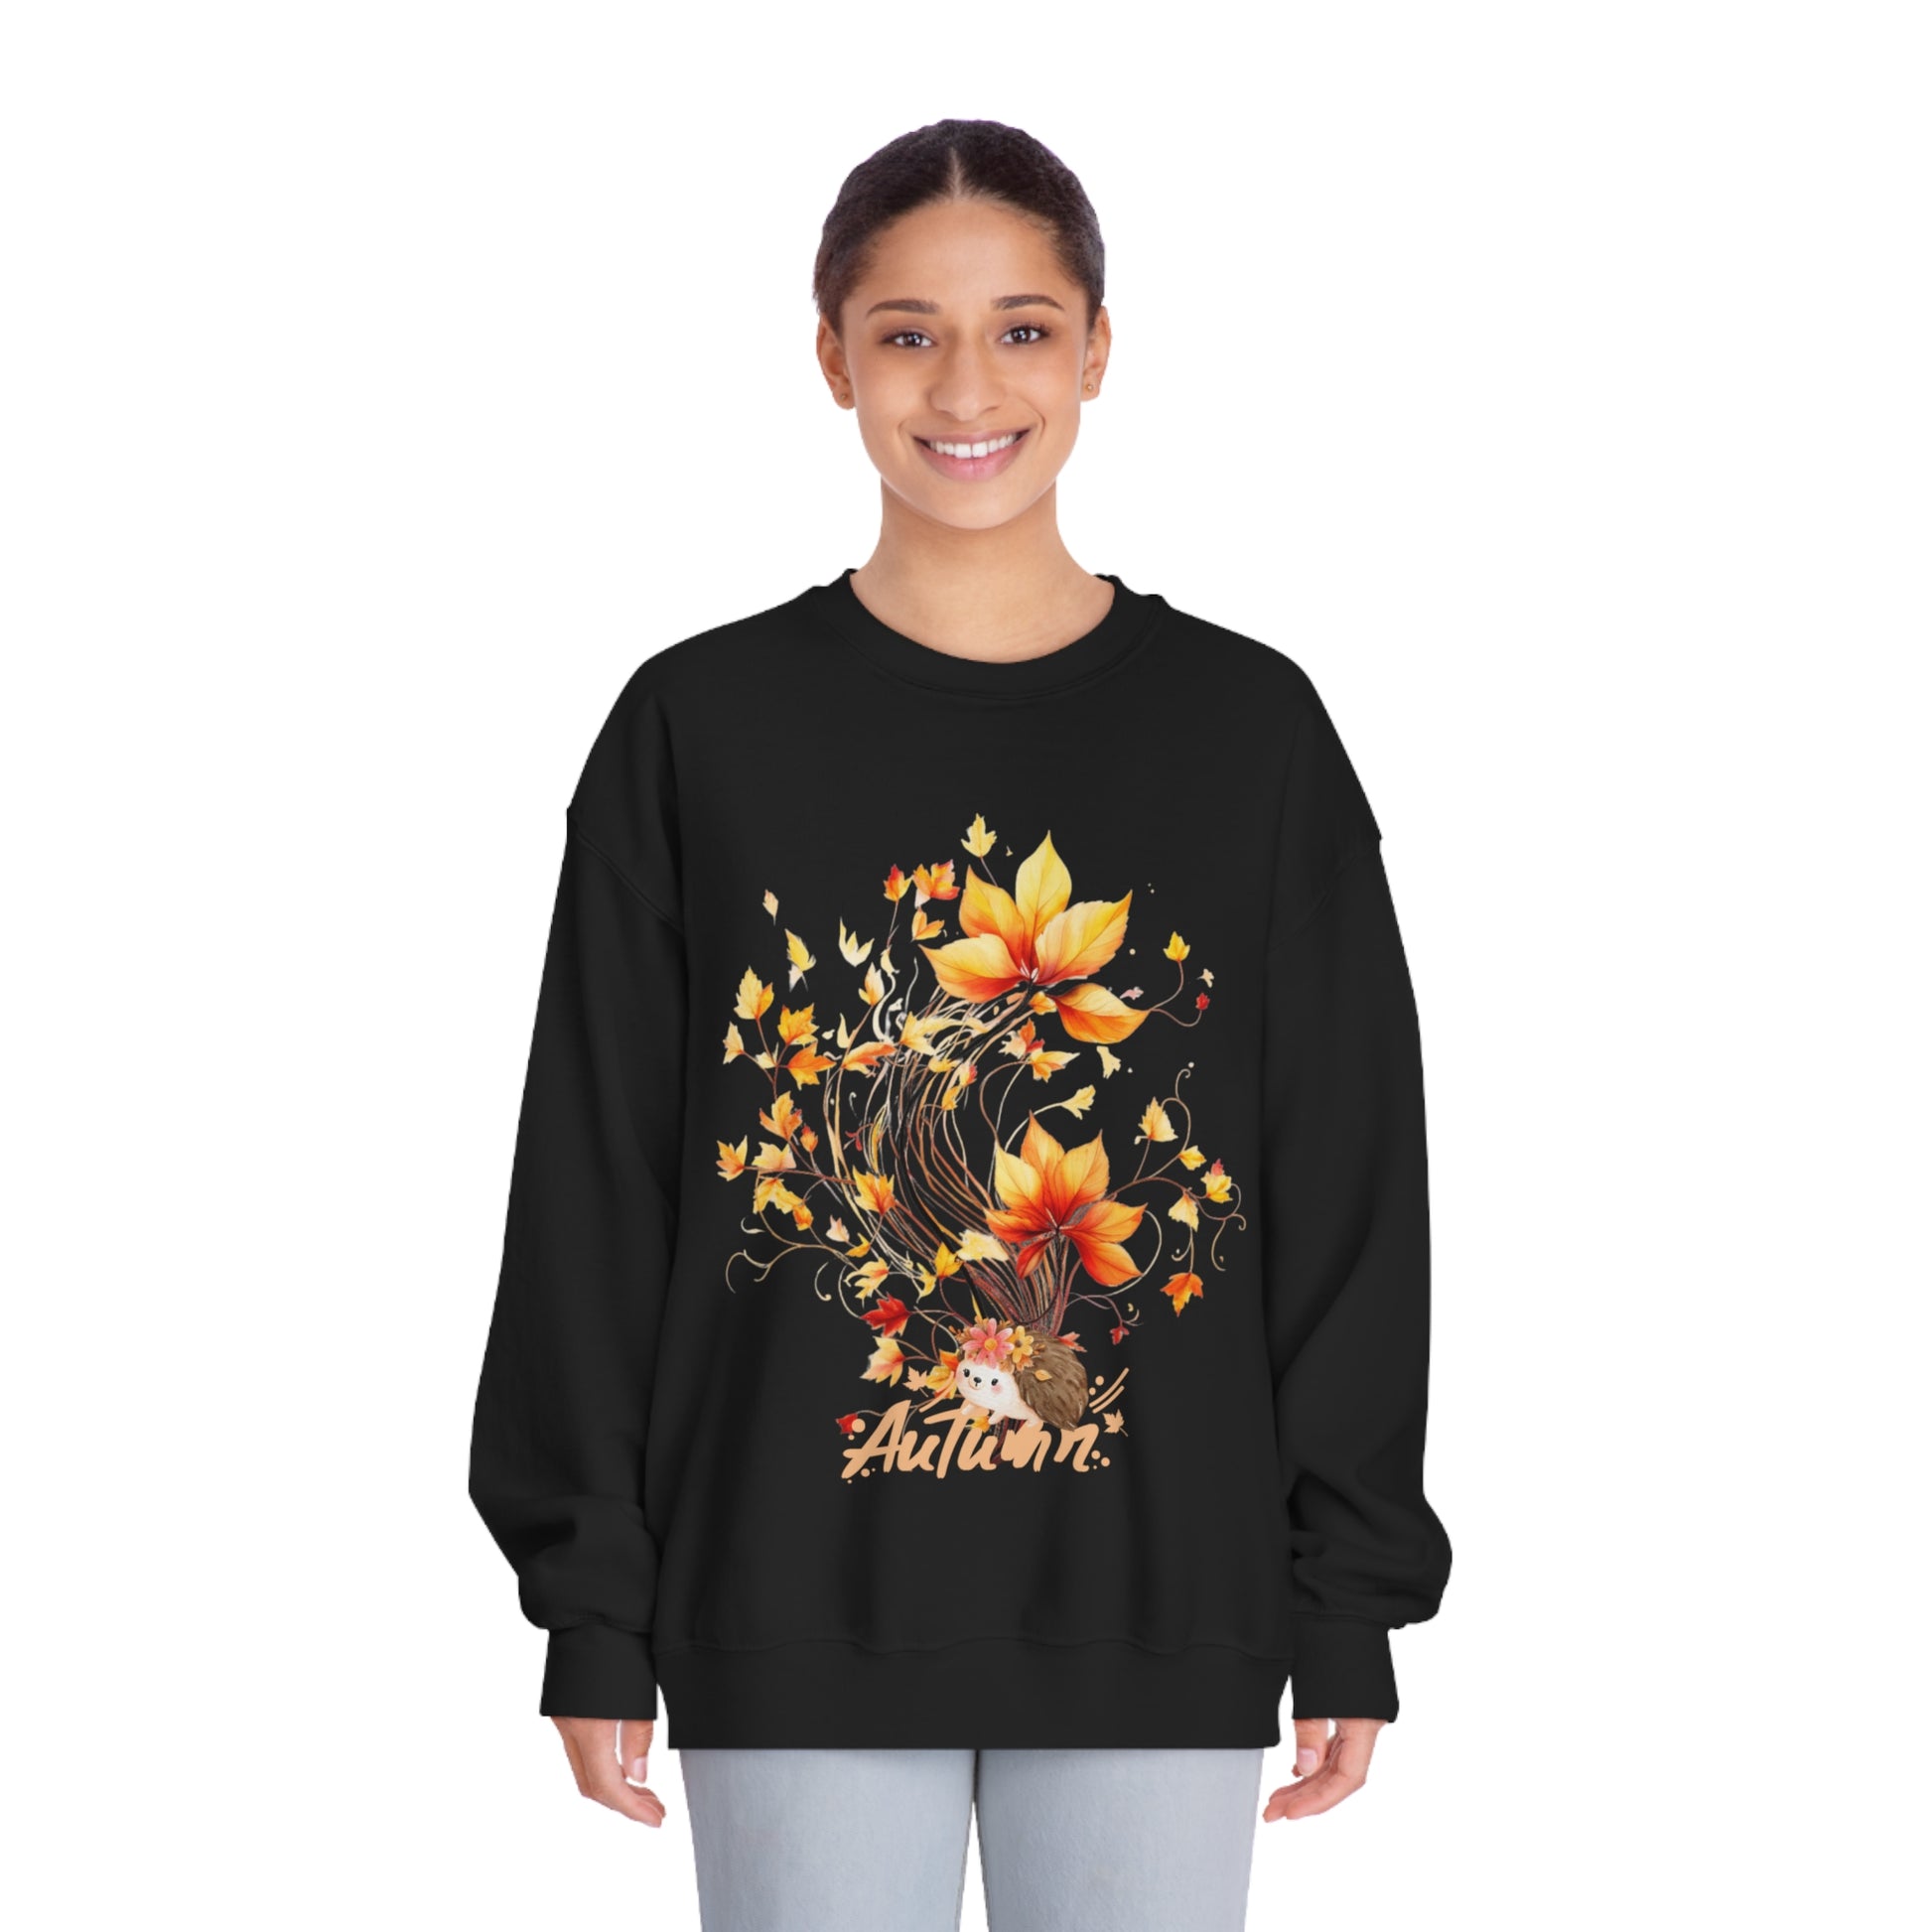 Autumn Queen Sweatshirt | Fall Fashion Sweatshirt Black S 